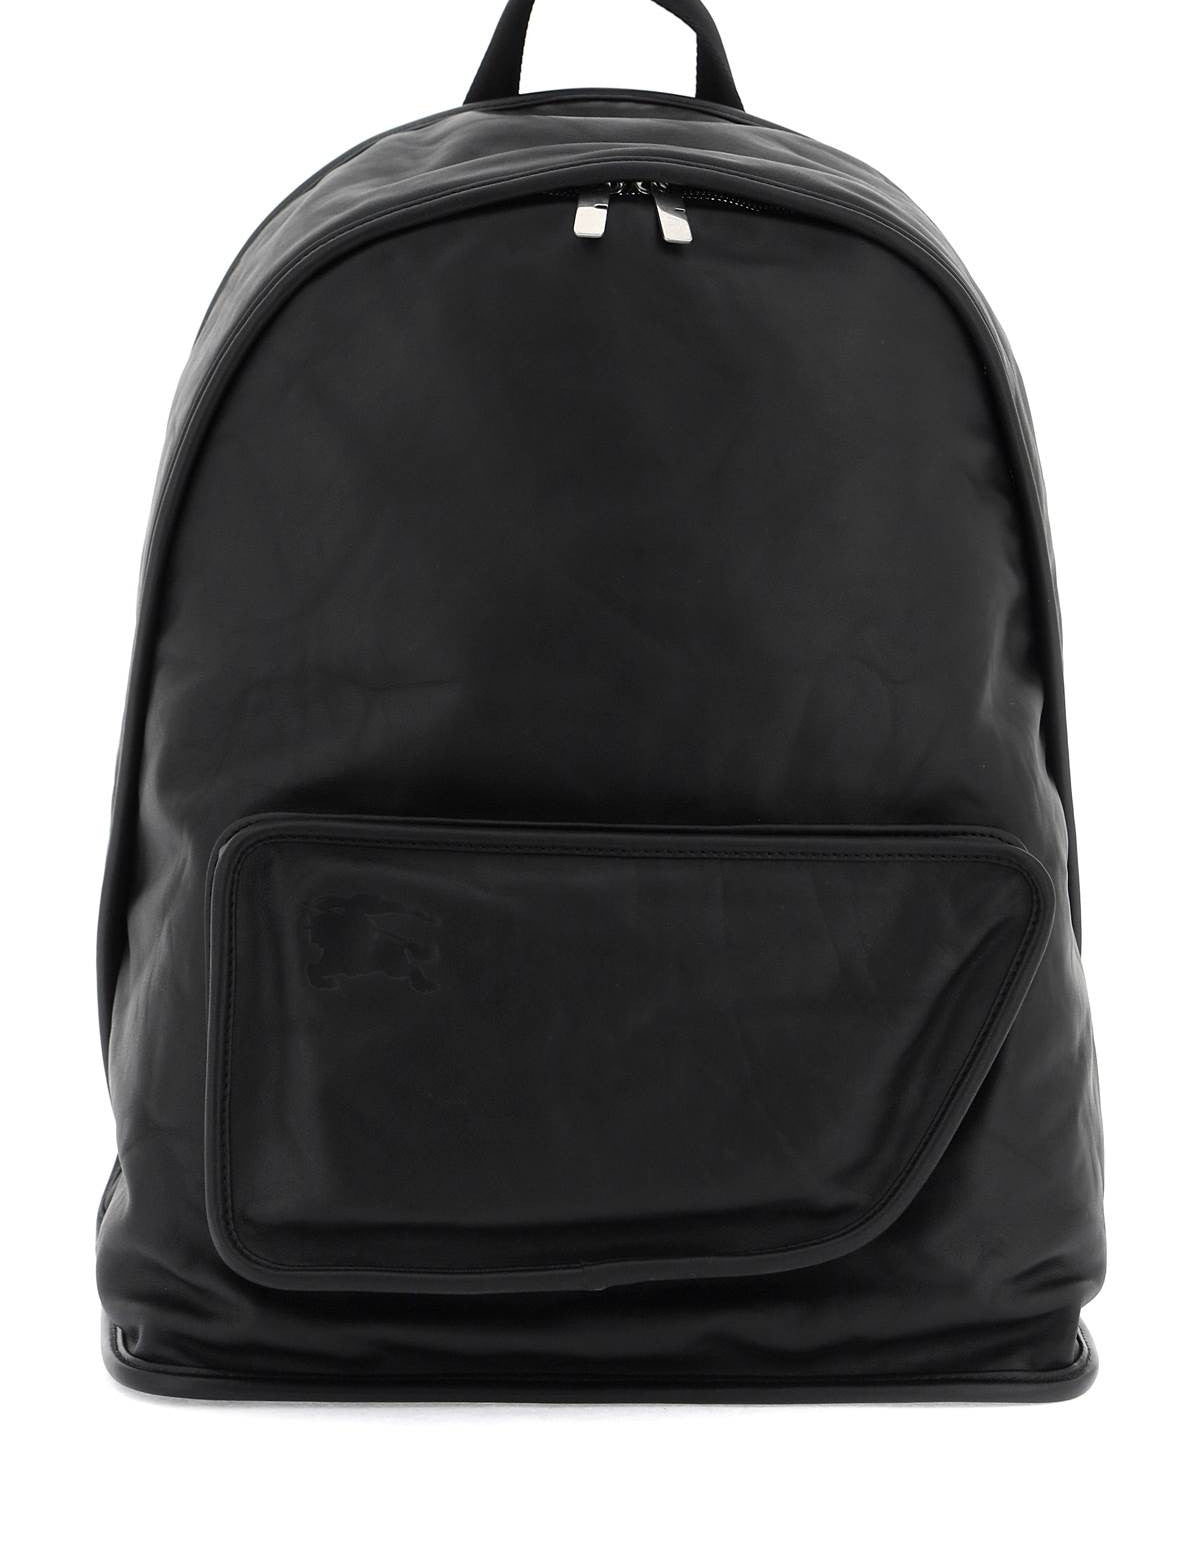 burberry-crinkled-leather-shield-backpack.jpg